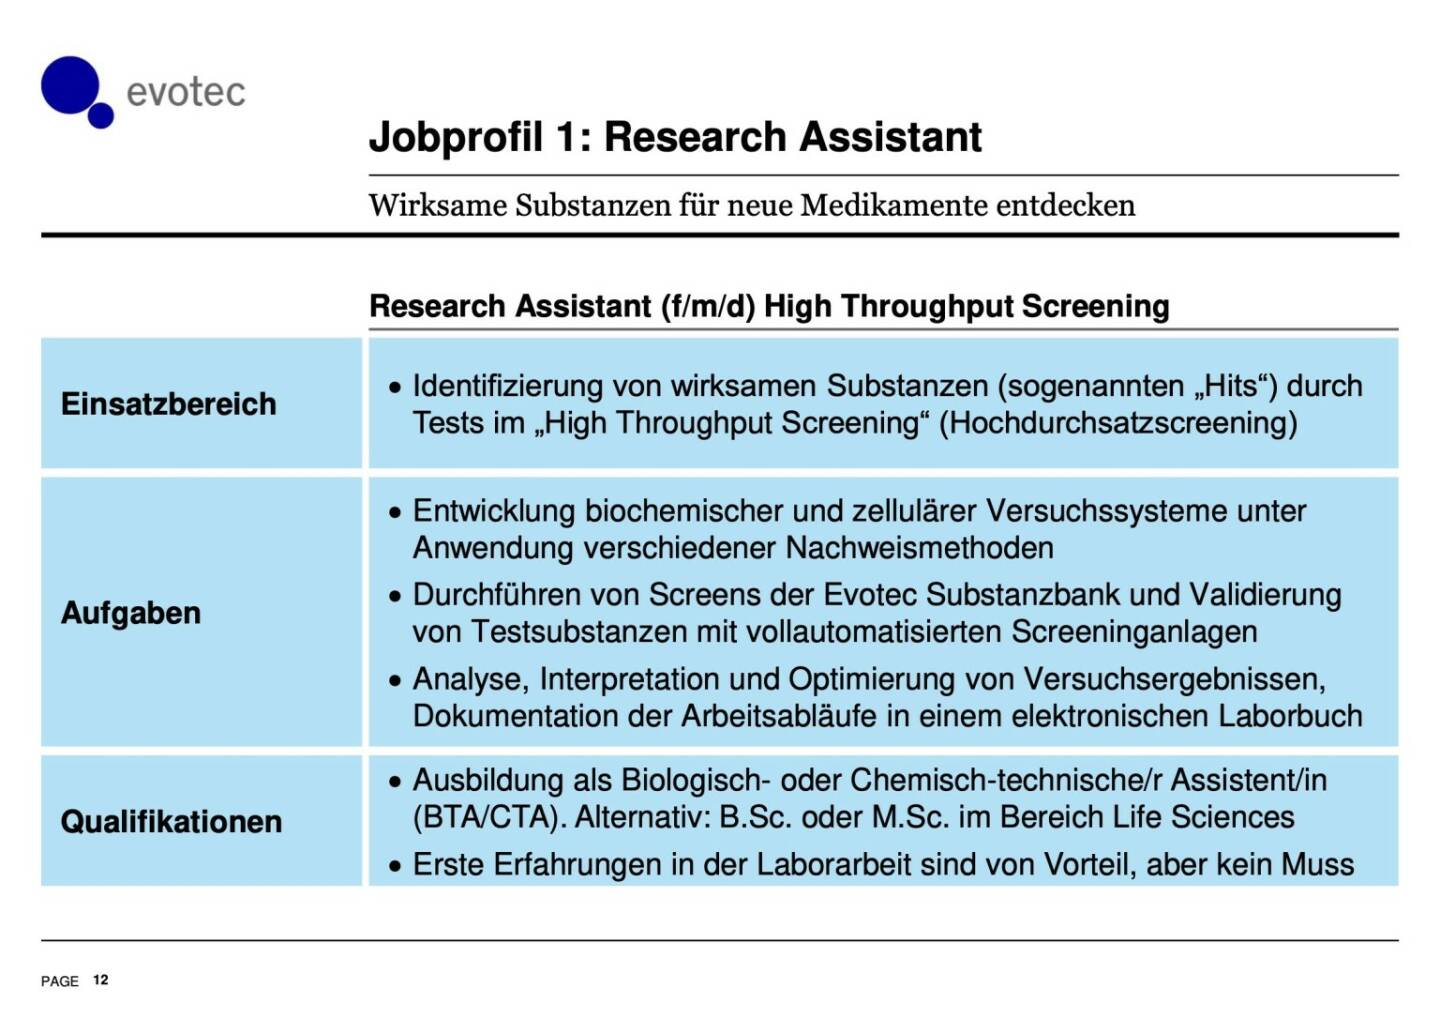 Evotec - Jobprofil 1: Research Assistant